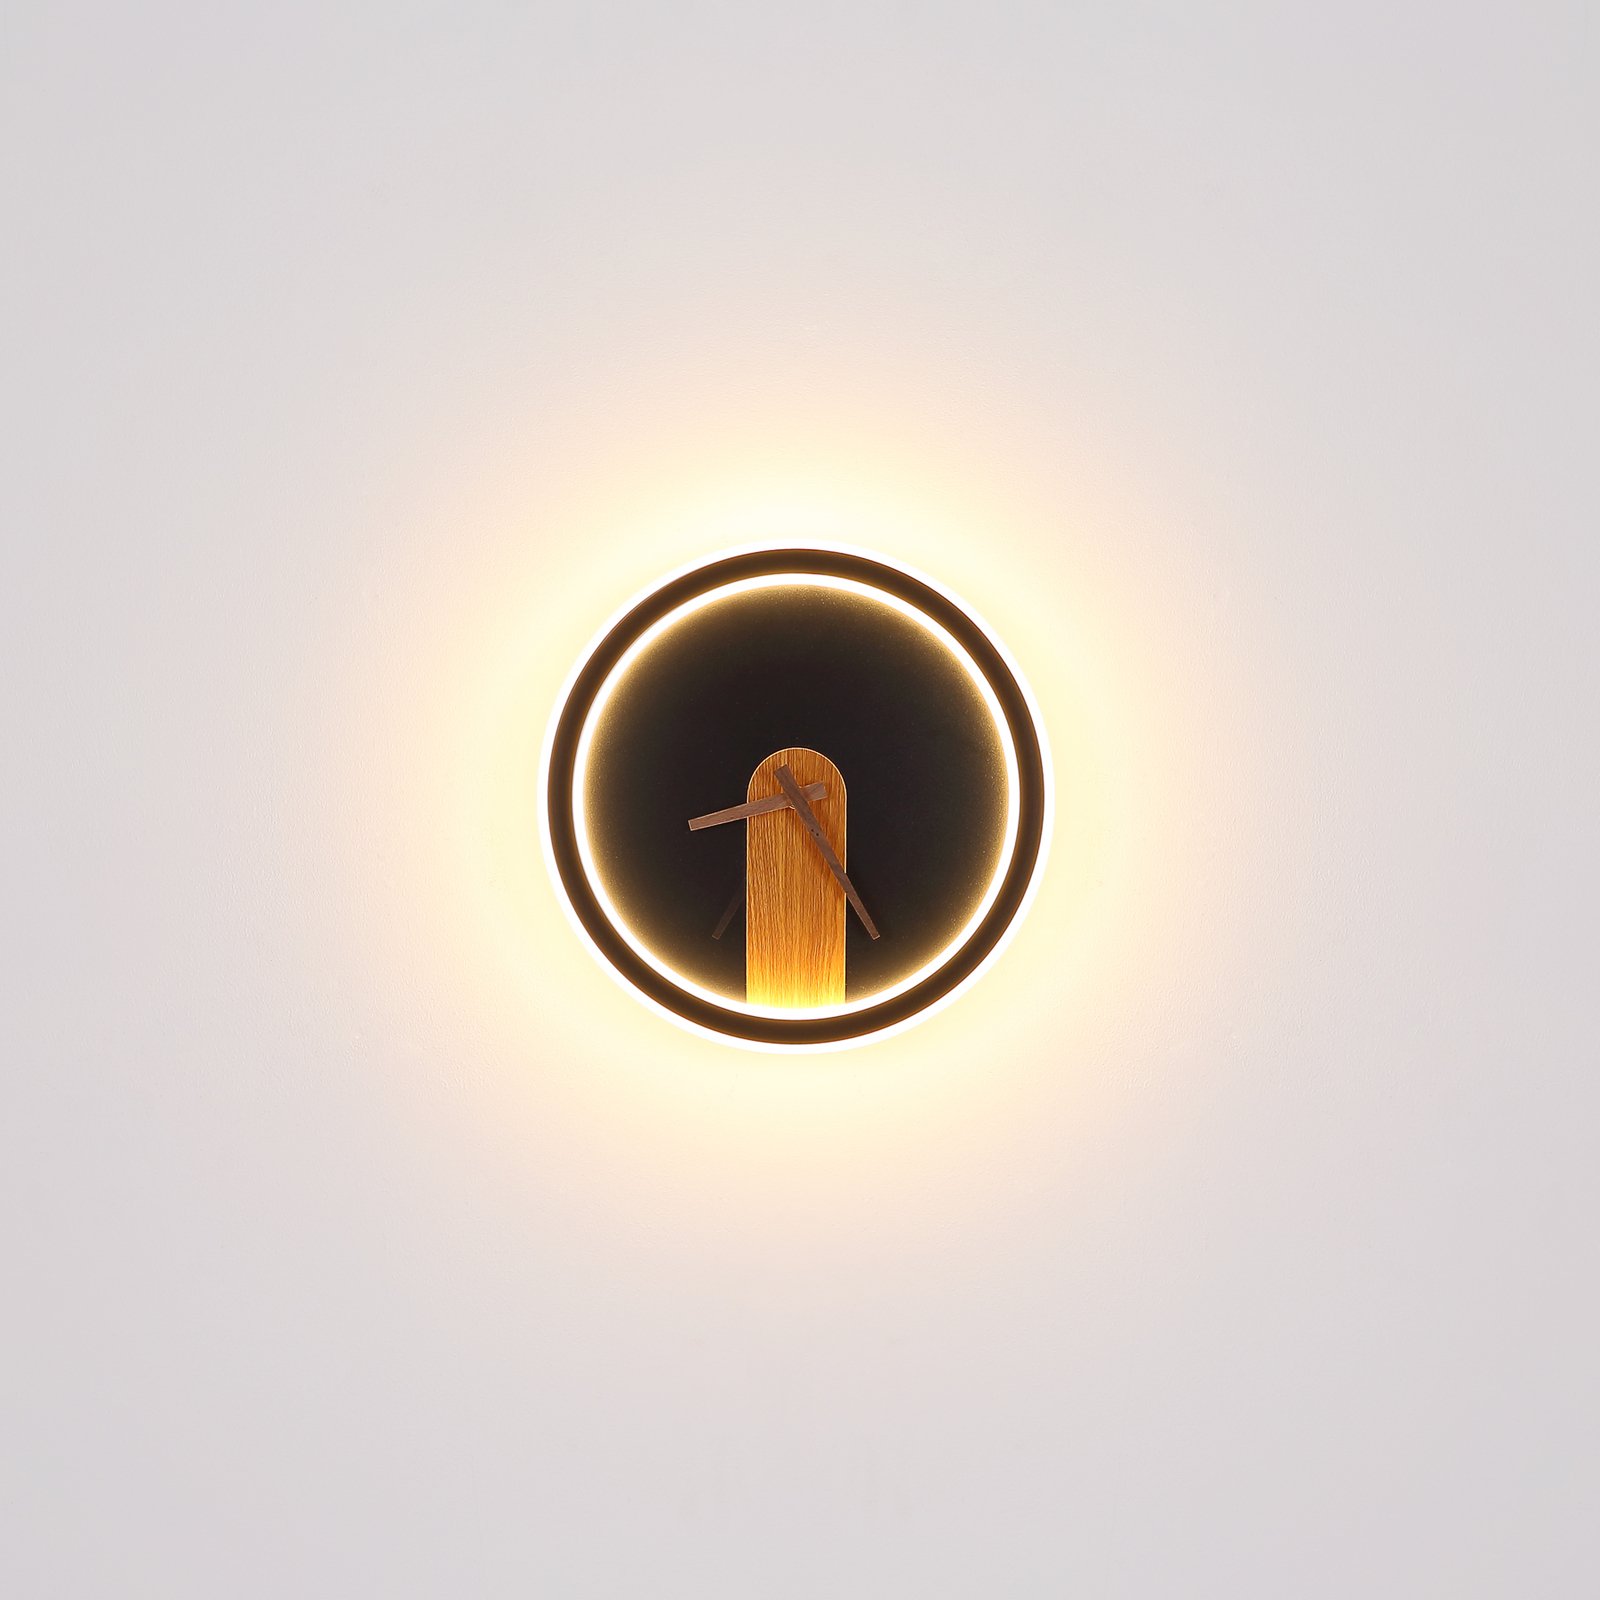 LED-Wandlampe Sussy mit Uhr schwarz/holz dunkel